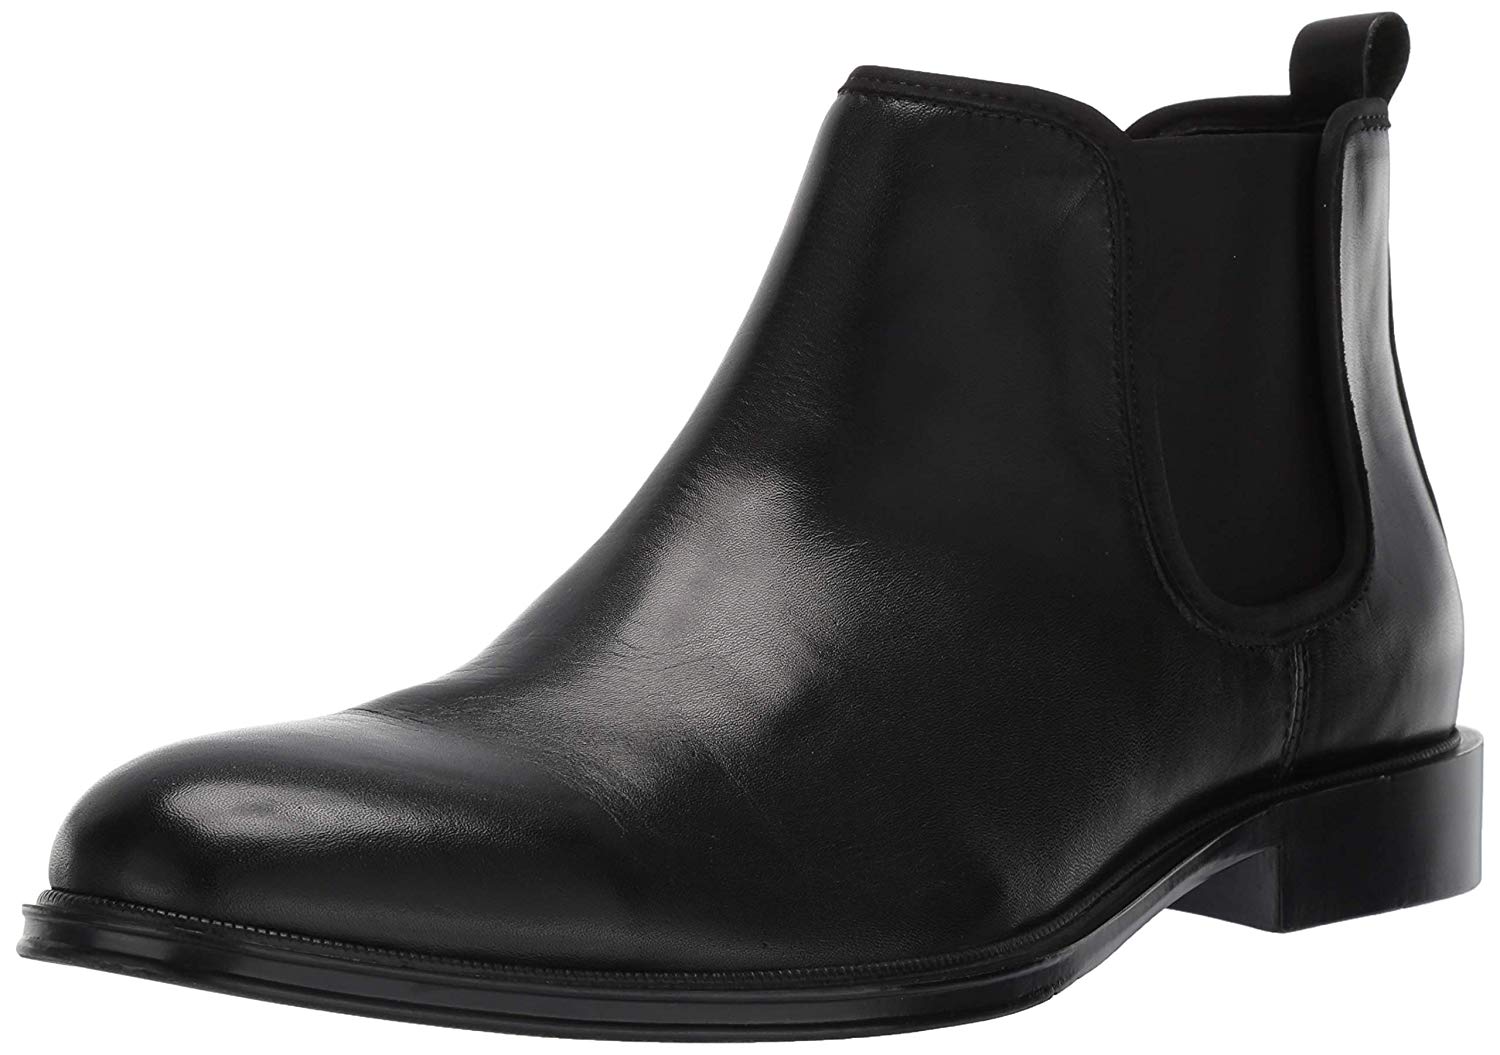 Kenneth Cole REACTION Men's Zac Chelsea Boot, Black, Size 8.5 fU7f | eBay